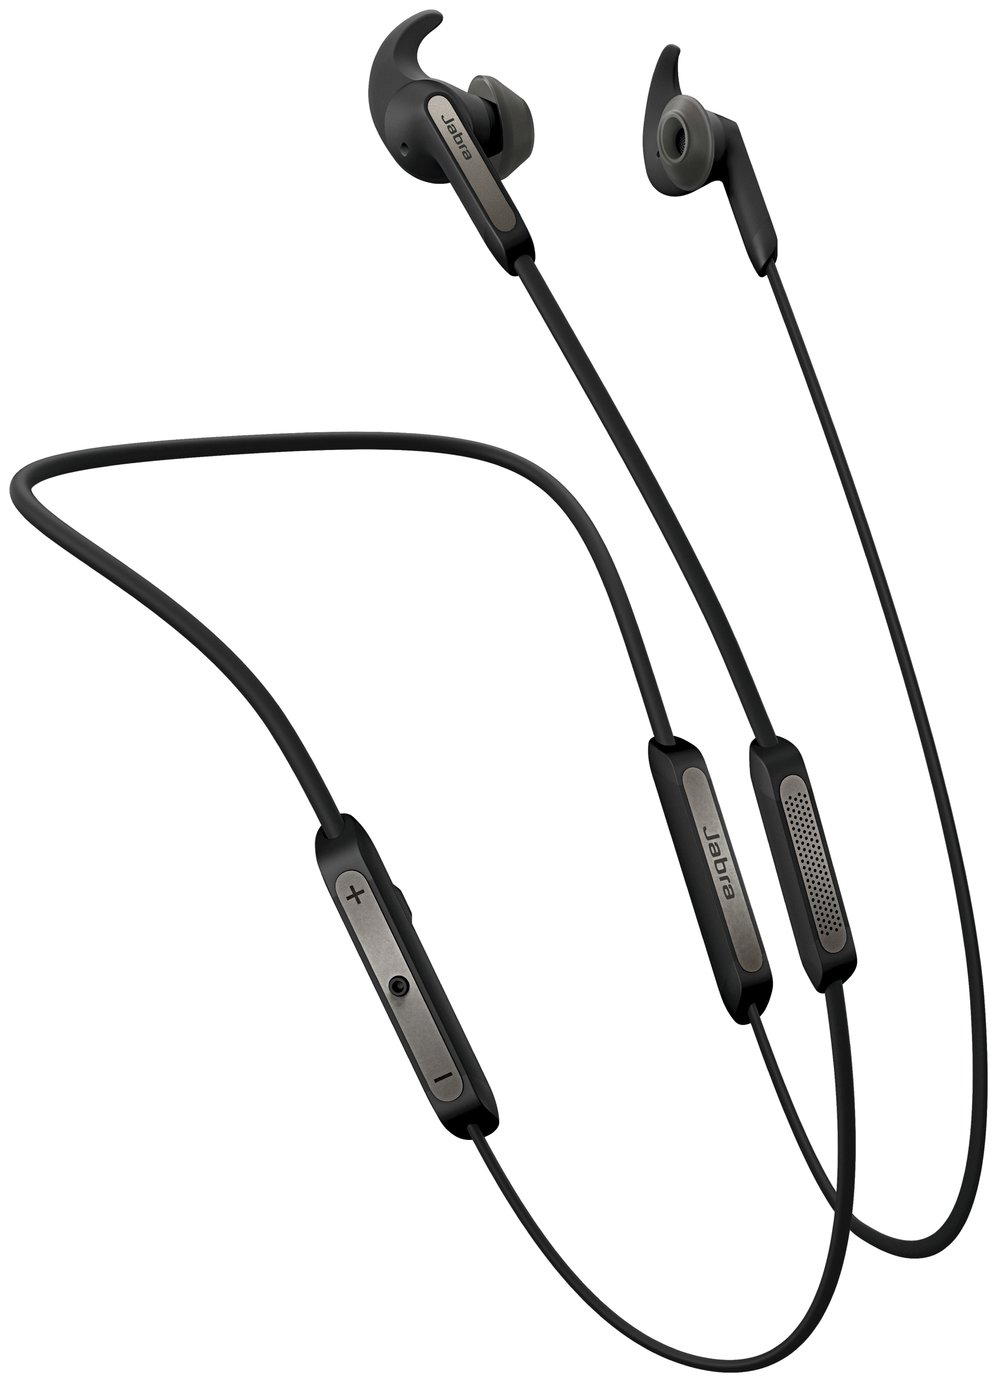 Jabra Elite 45e In - Ear Bluetooth Headphones